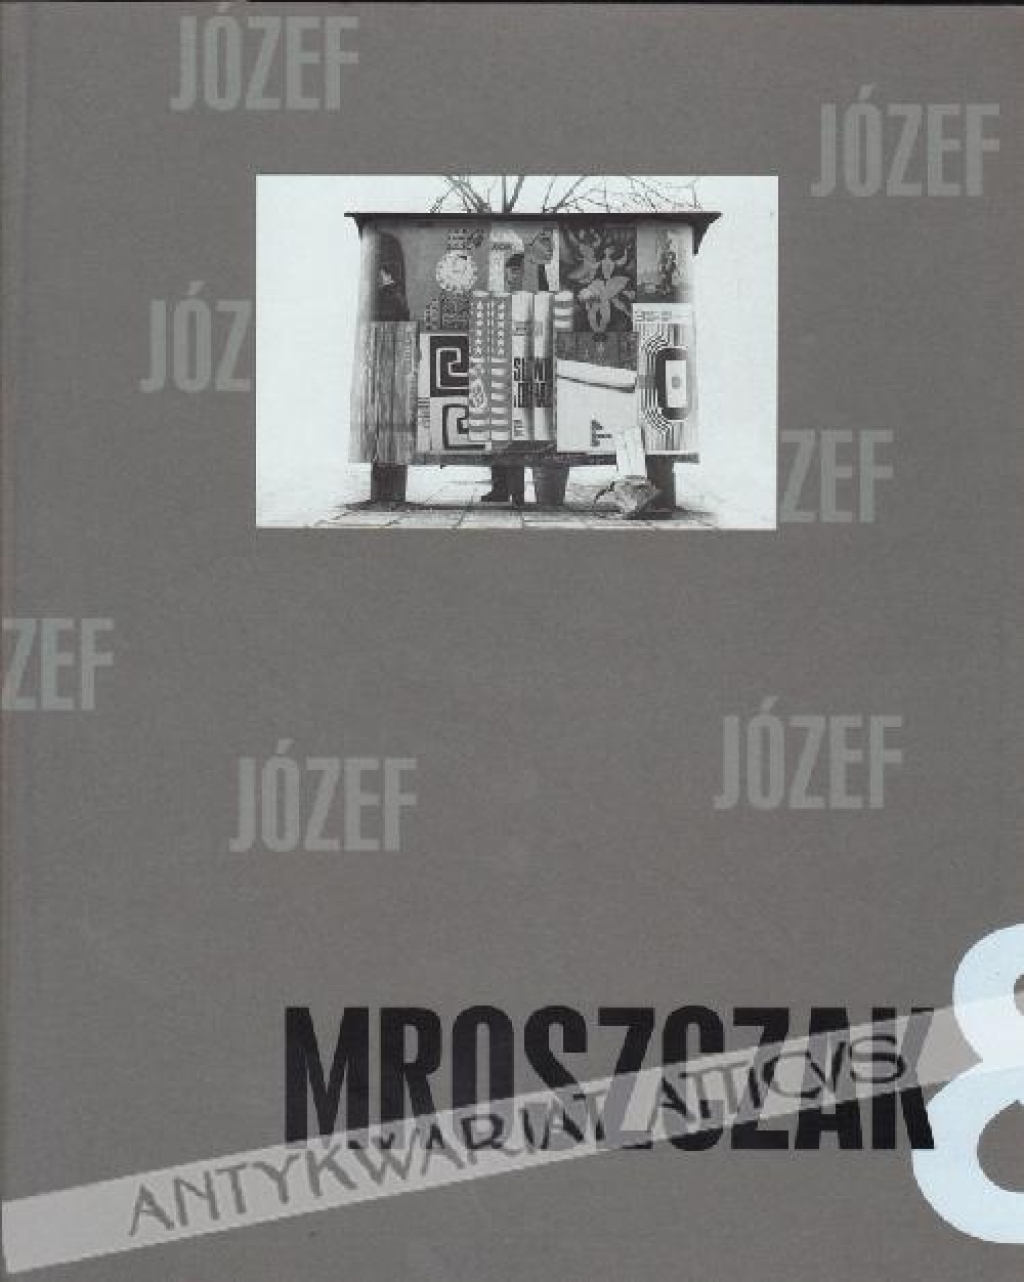 Józef Mroszczak [katalog wystawy]